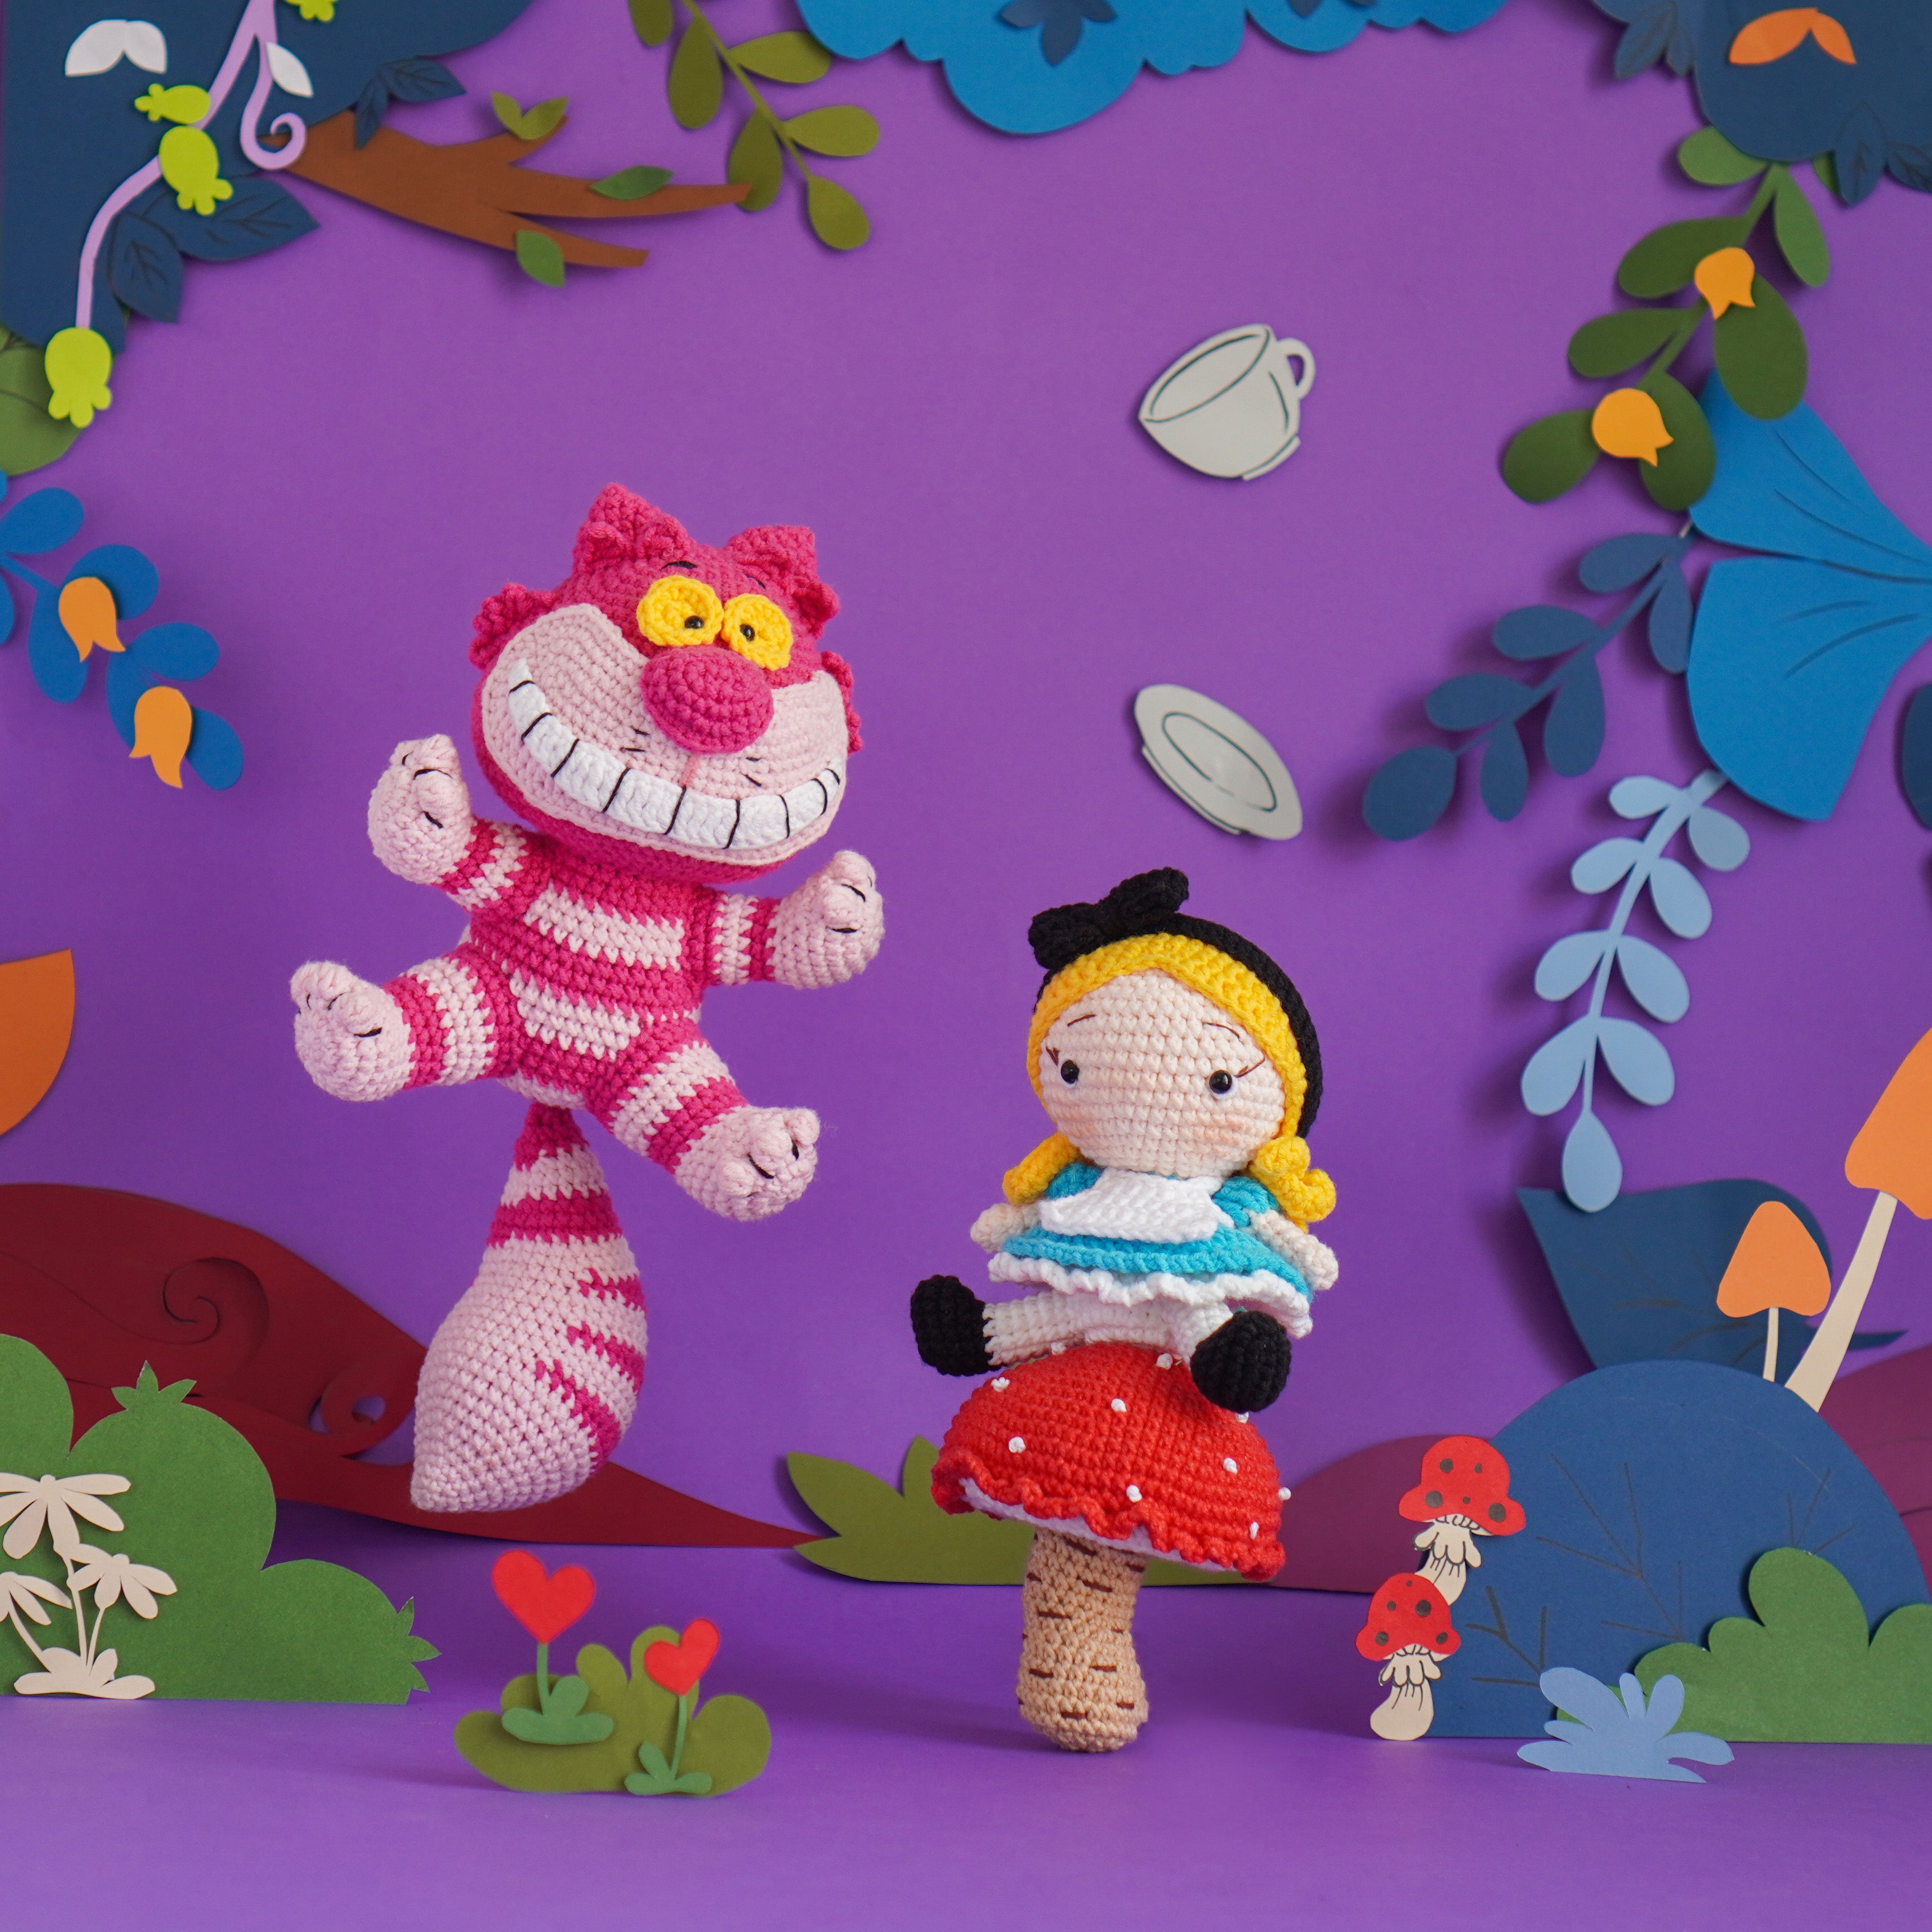 Alice in Wonderland (Amigurumi Pattern/Amigurumi Crochet Pattern/Crochet Amigurumi Pattern by Aquariwool)